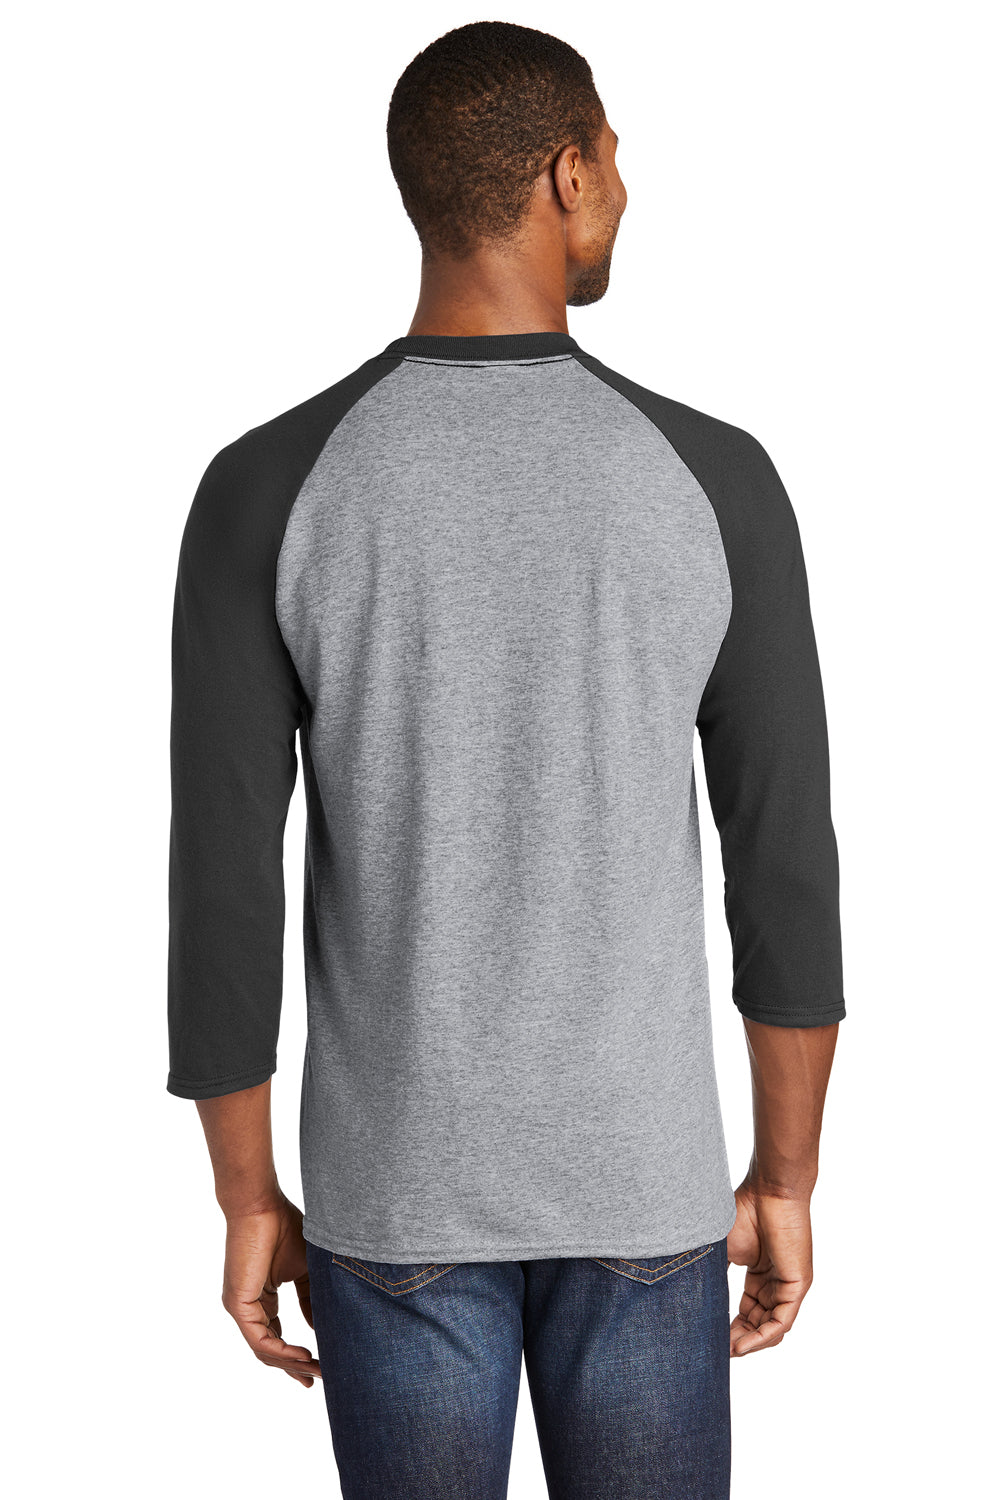 Port & Company PC55RS Mens Core Moisture Wicking 3/4 Sleeve Crewneck T-Shirt Heather Grey/Black Back